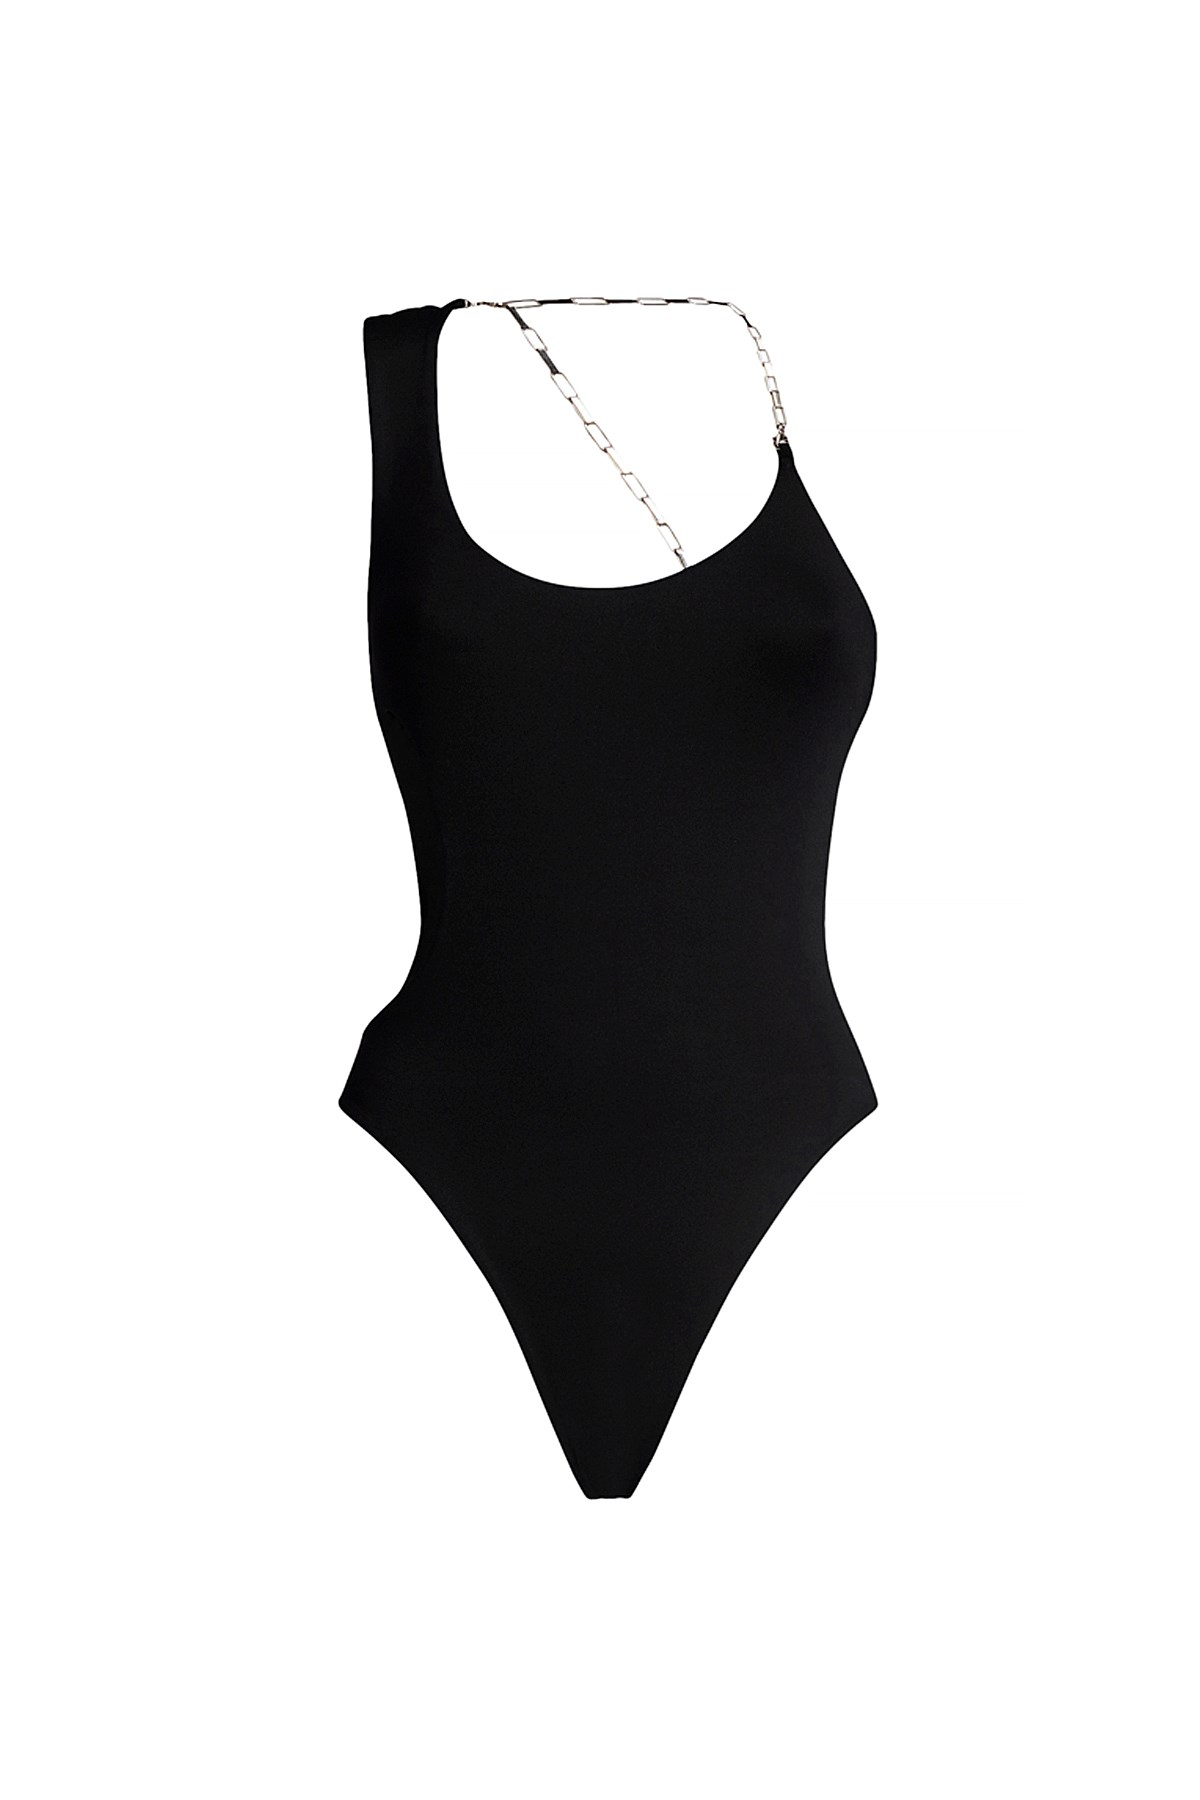 THE ATTICO Beachwear Capsule Chain Detail One-Piece Swimsuit